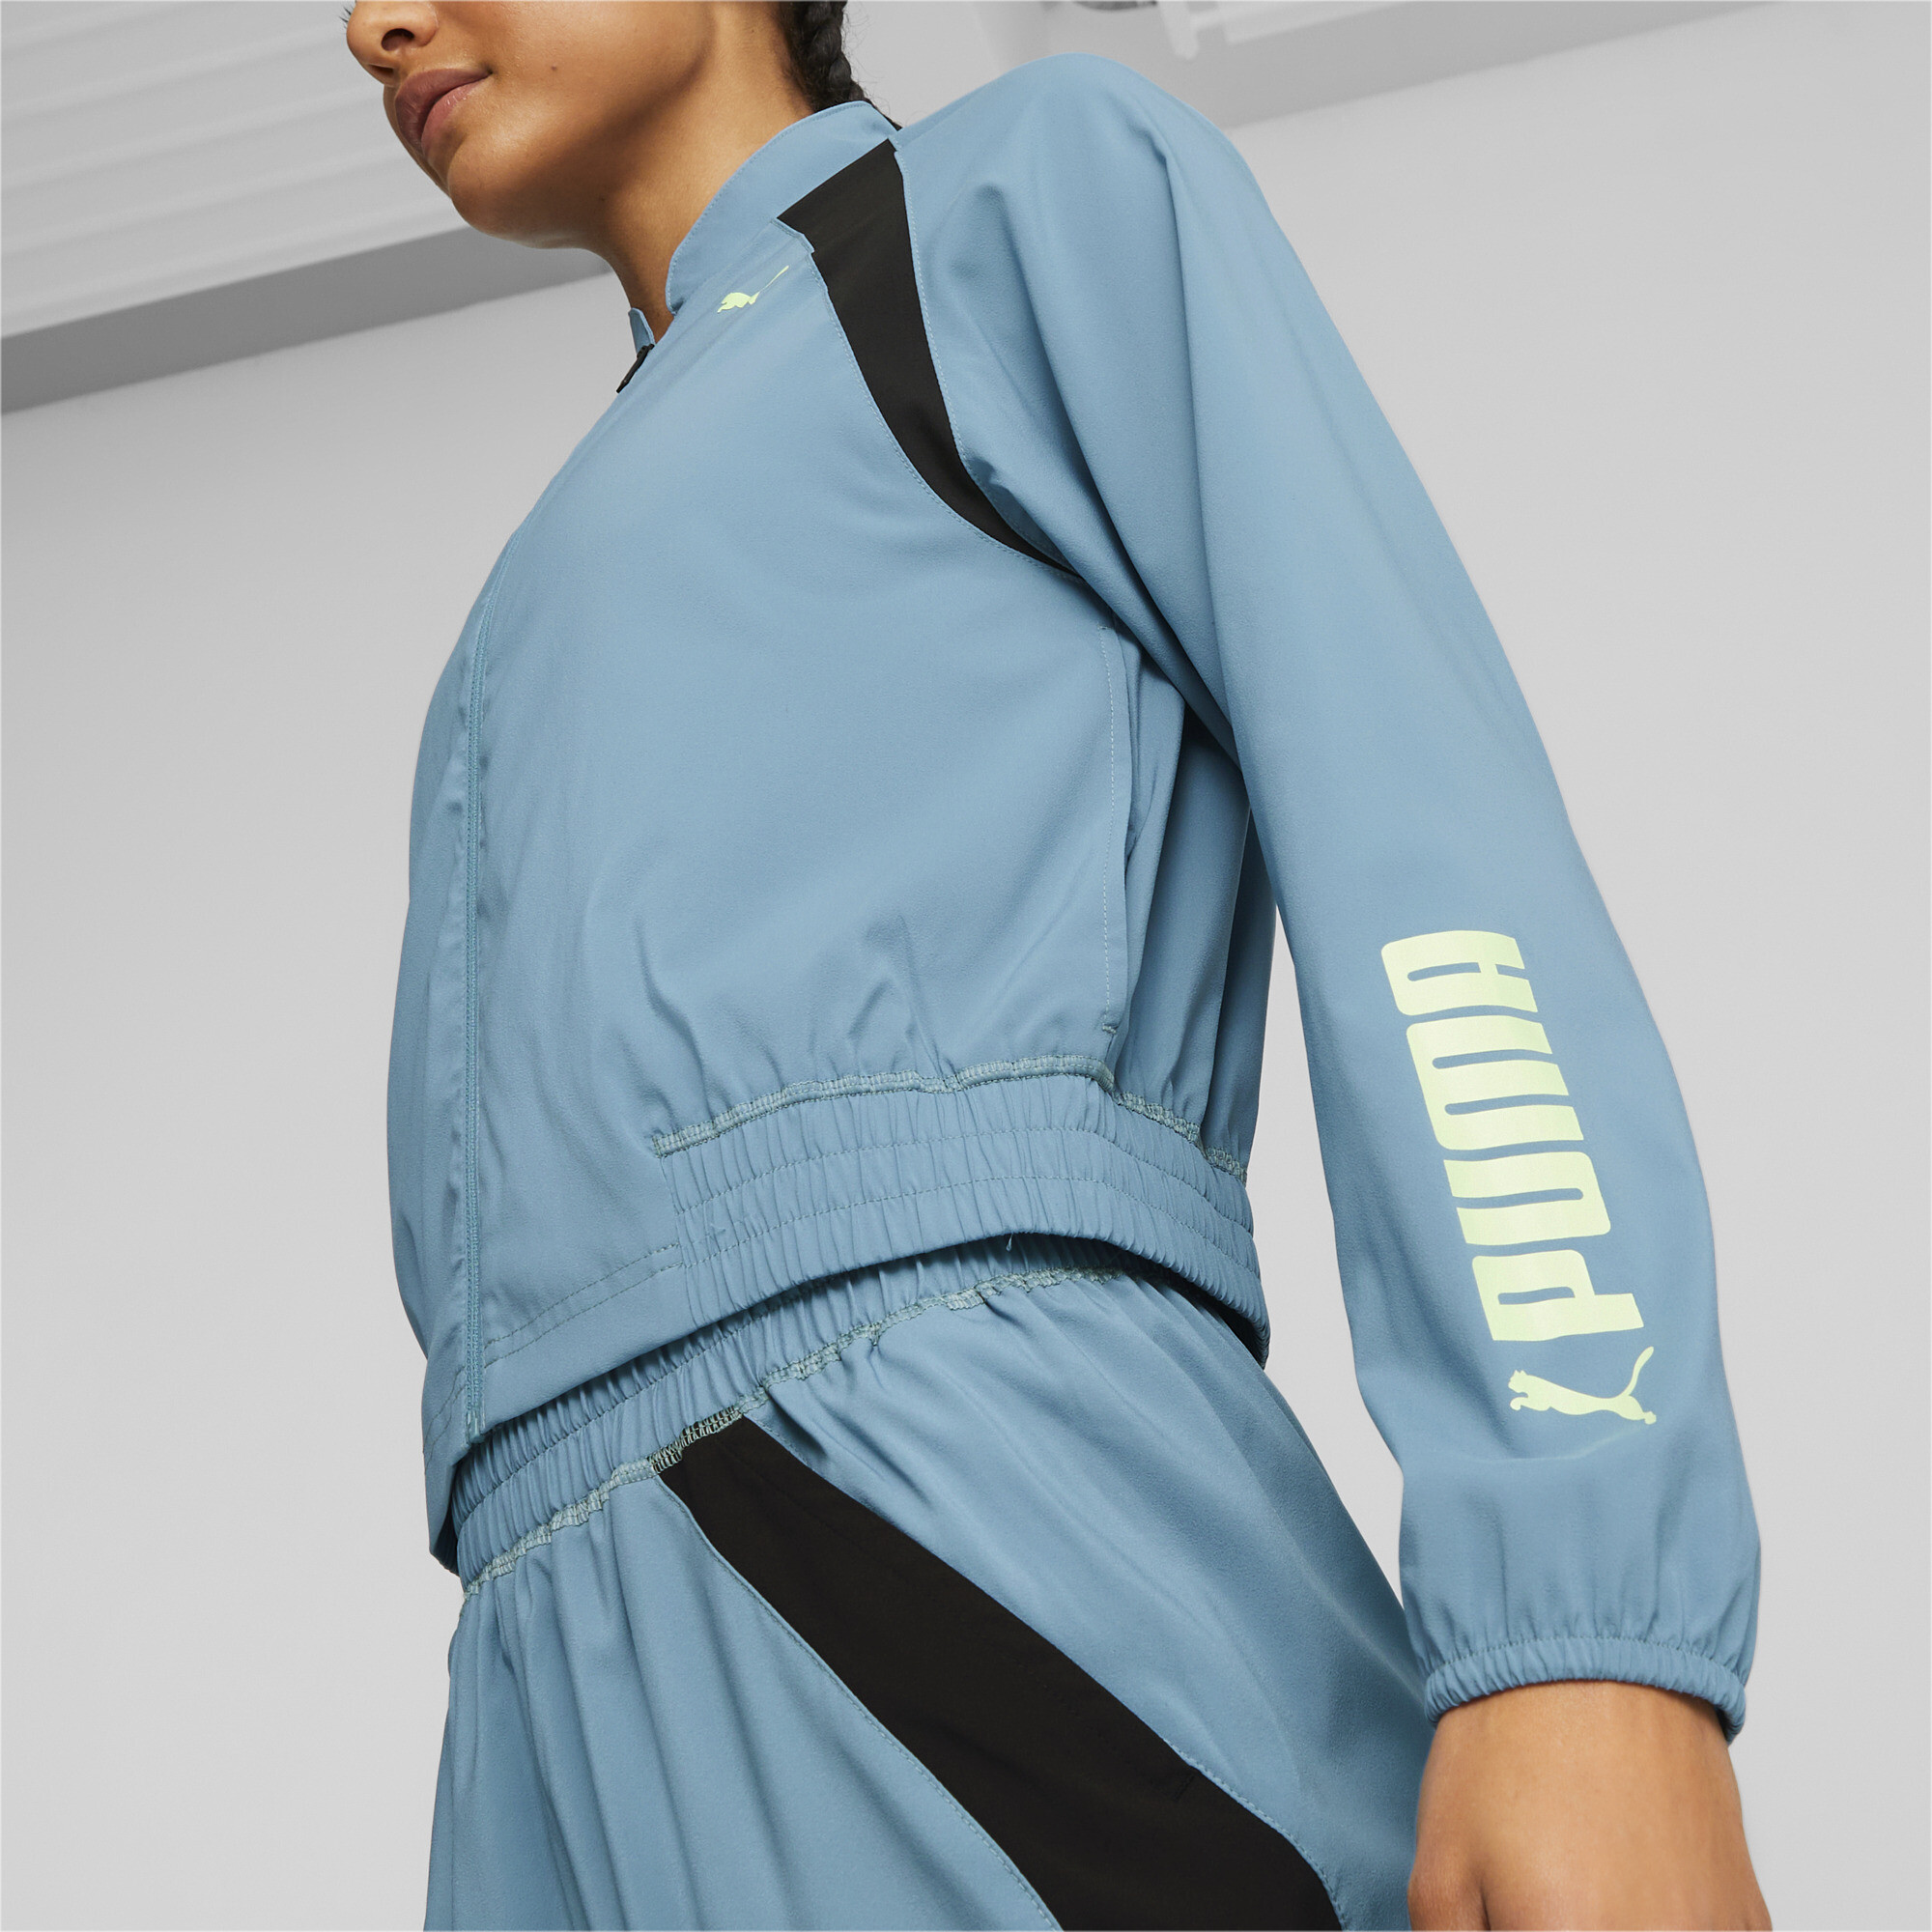 Women's PUMA Fit Training Jacket In Blue, Size XL